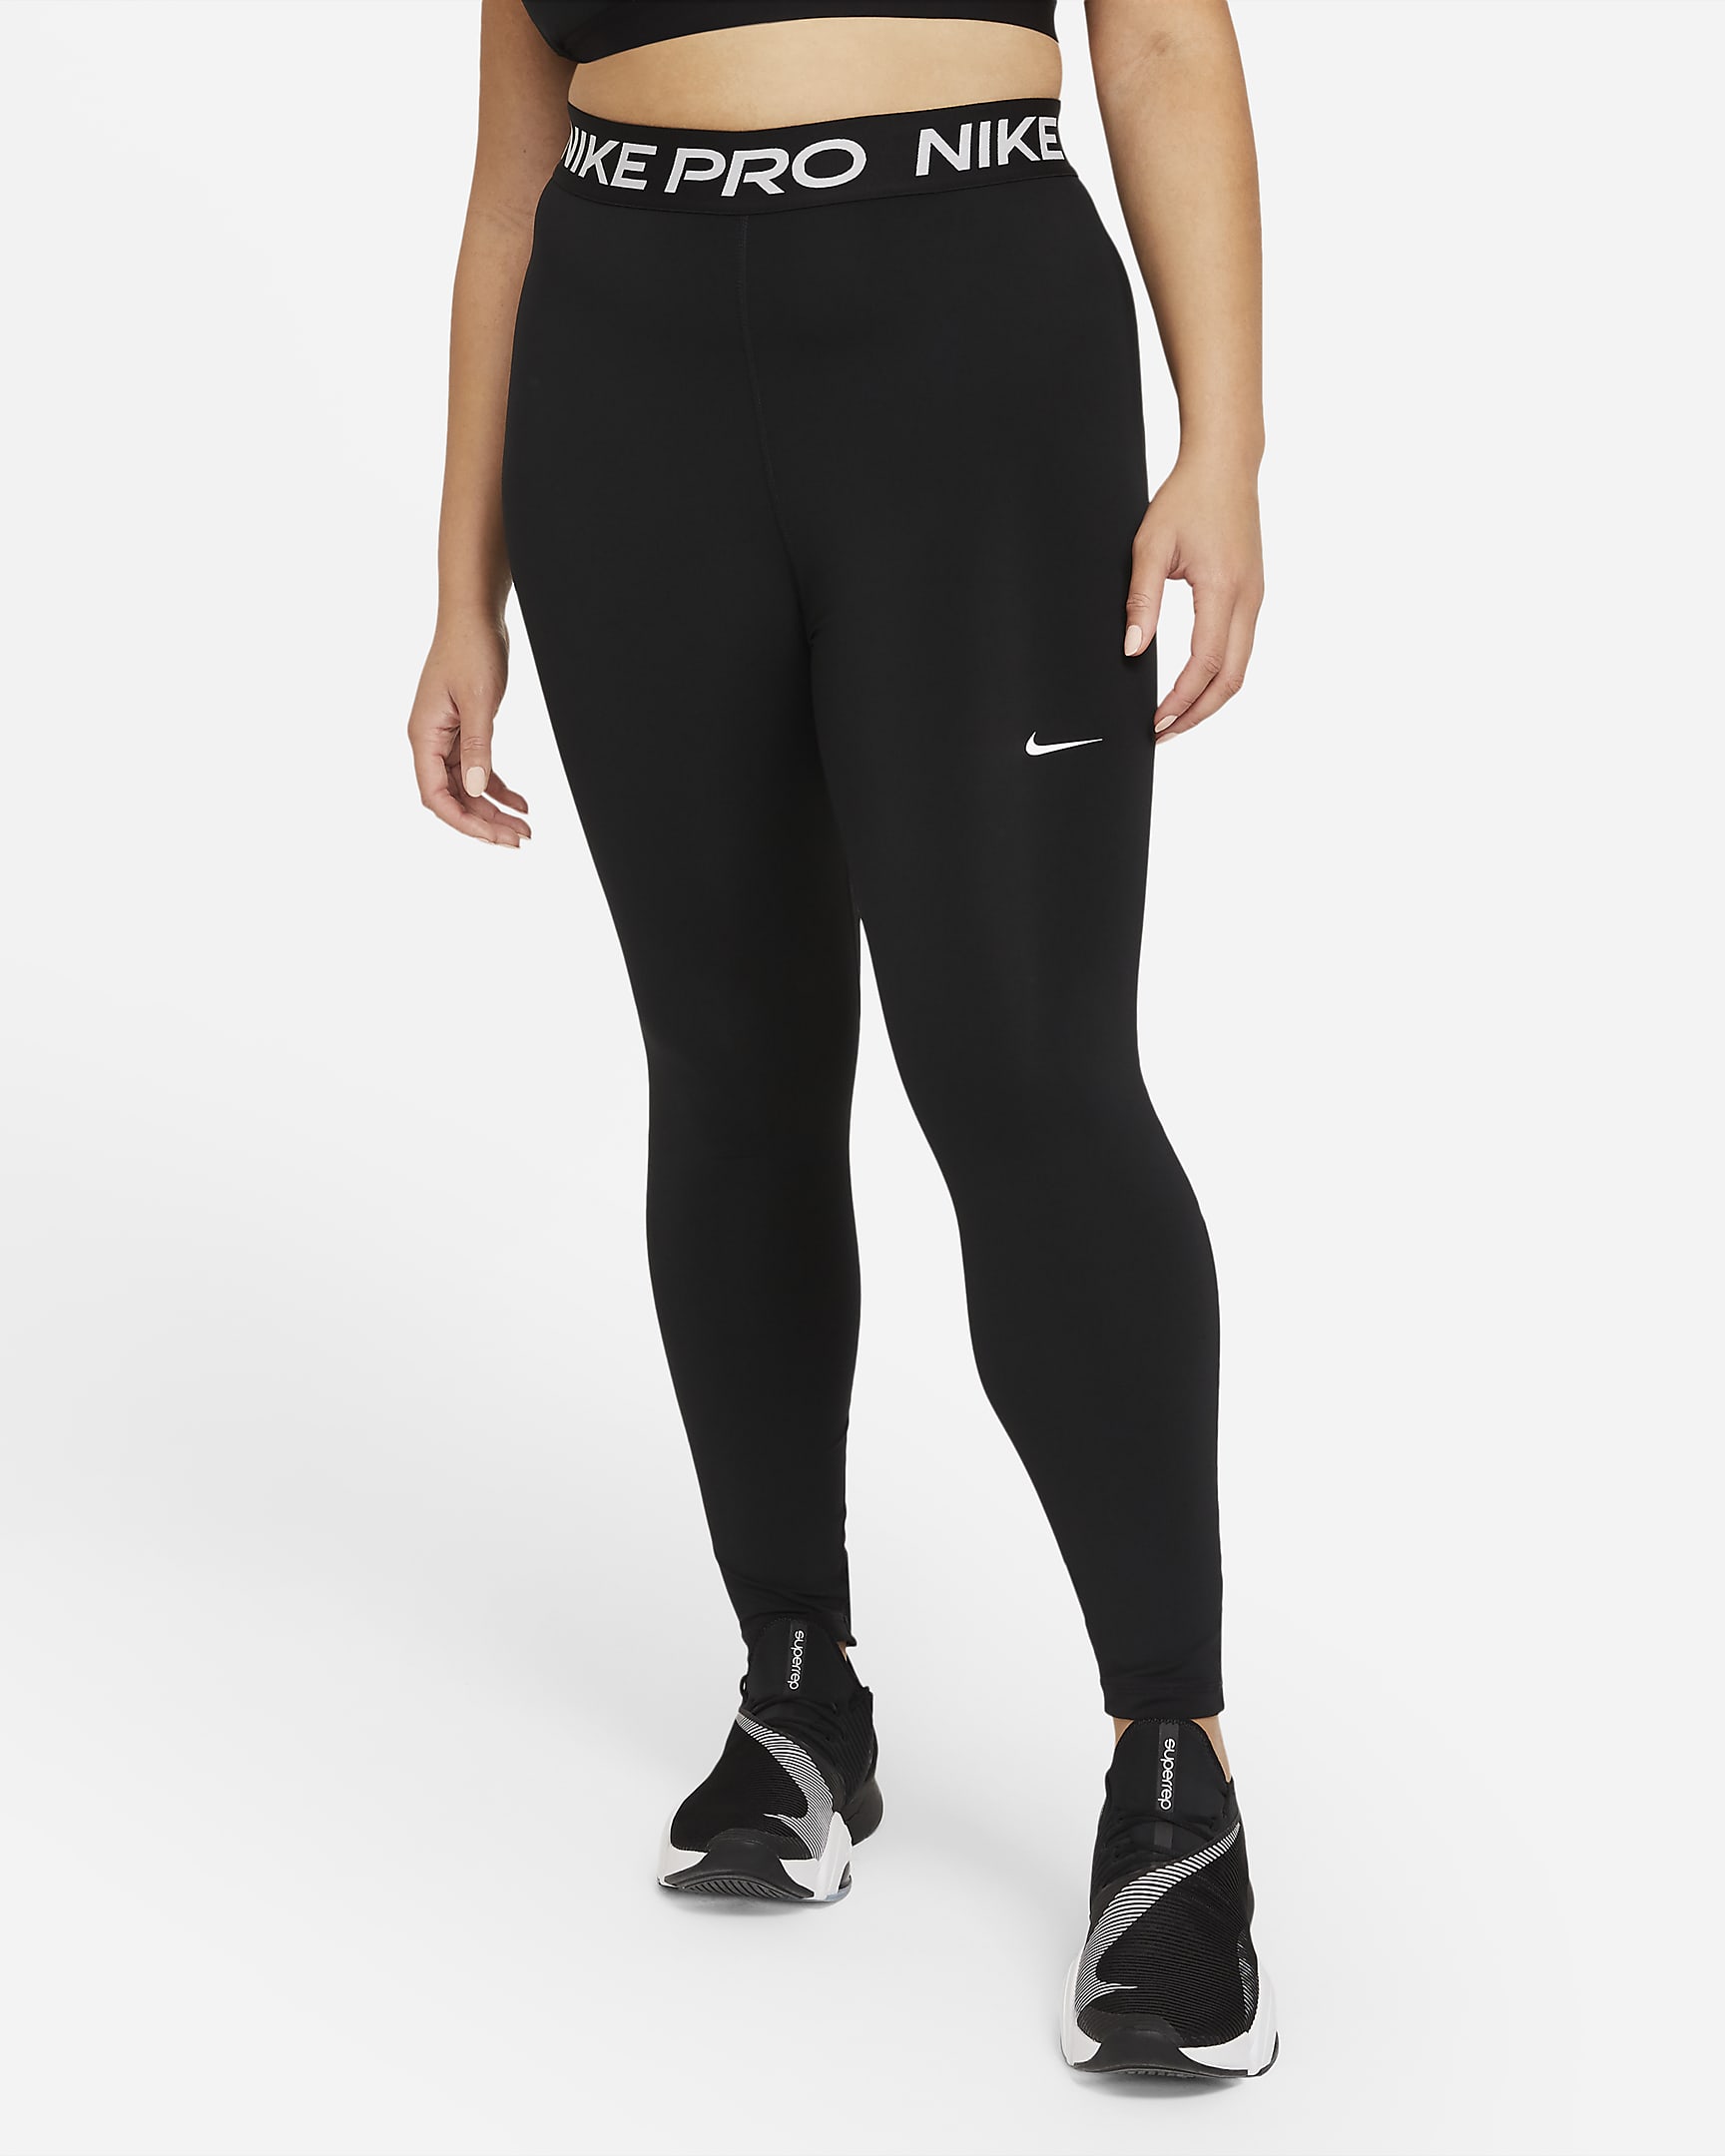 Leggings Nike Pro 365 para mulher (tamanhos Plus) - Preto/Branco